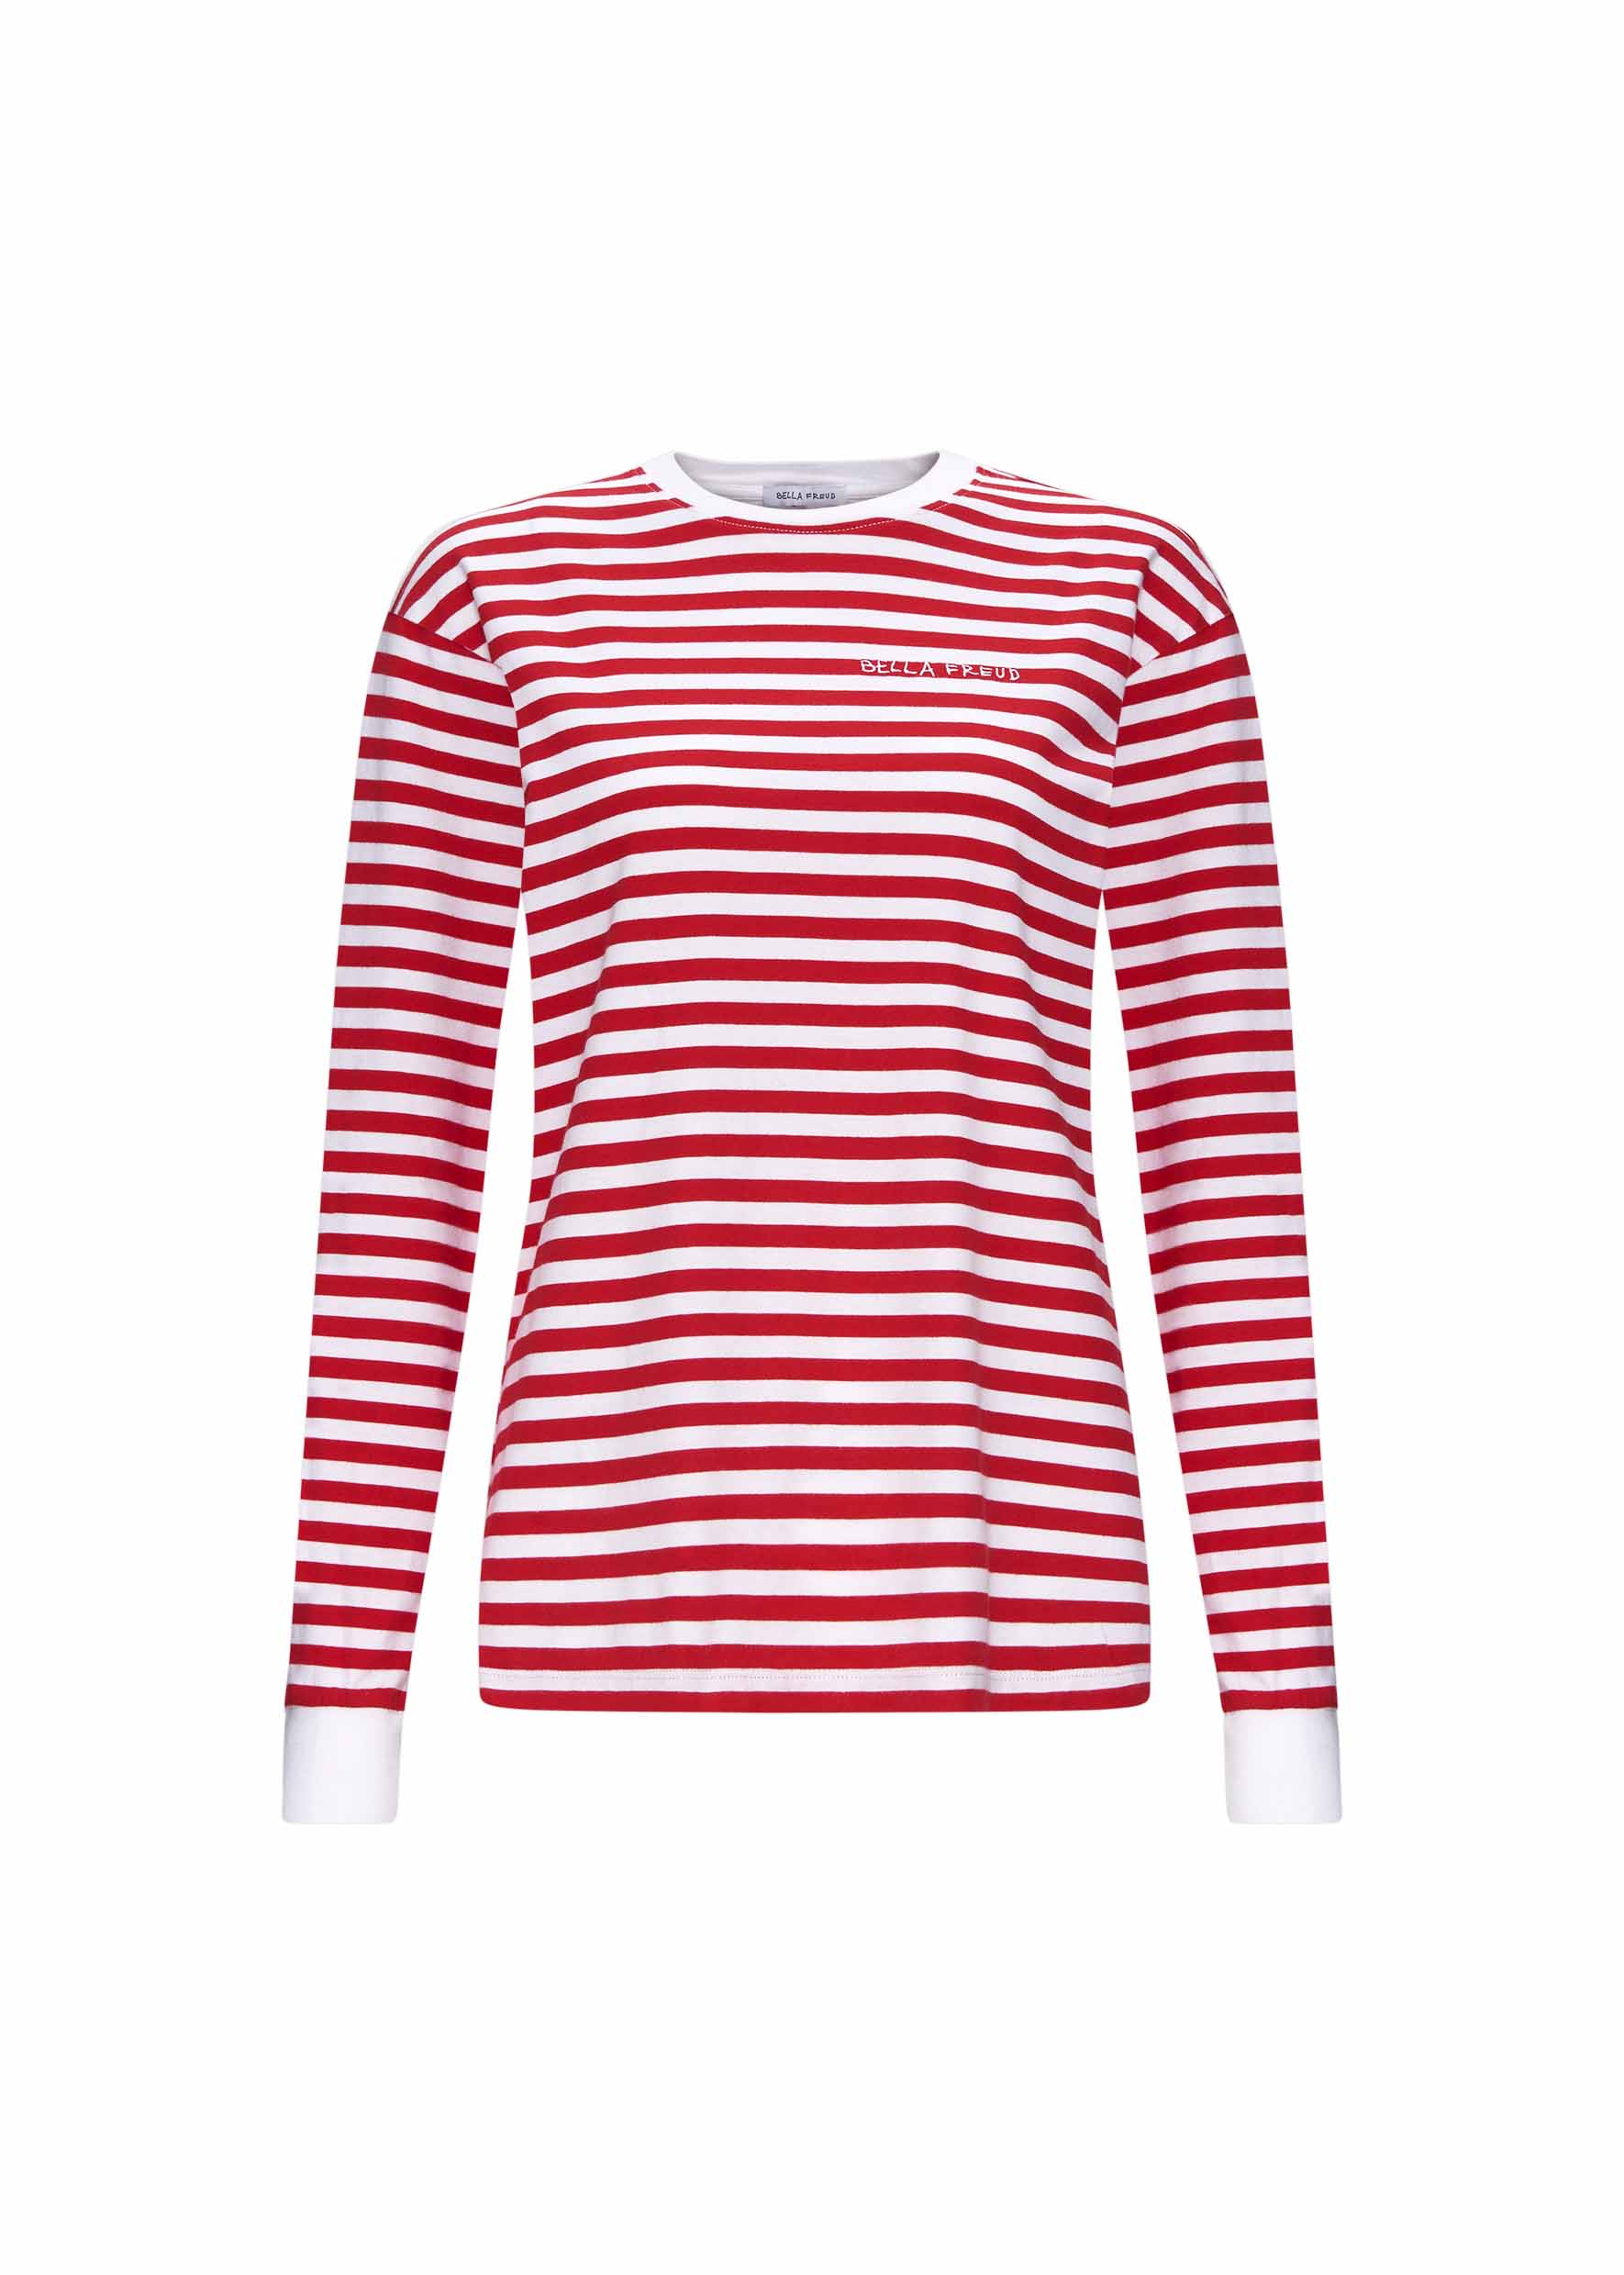 Bella Freud Long Sleeve Striped T-Shirt in Red | Bella Freud